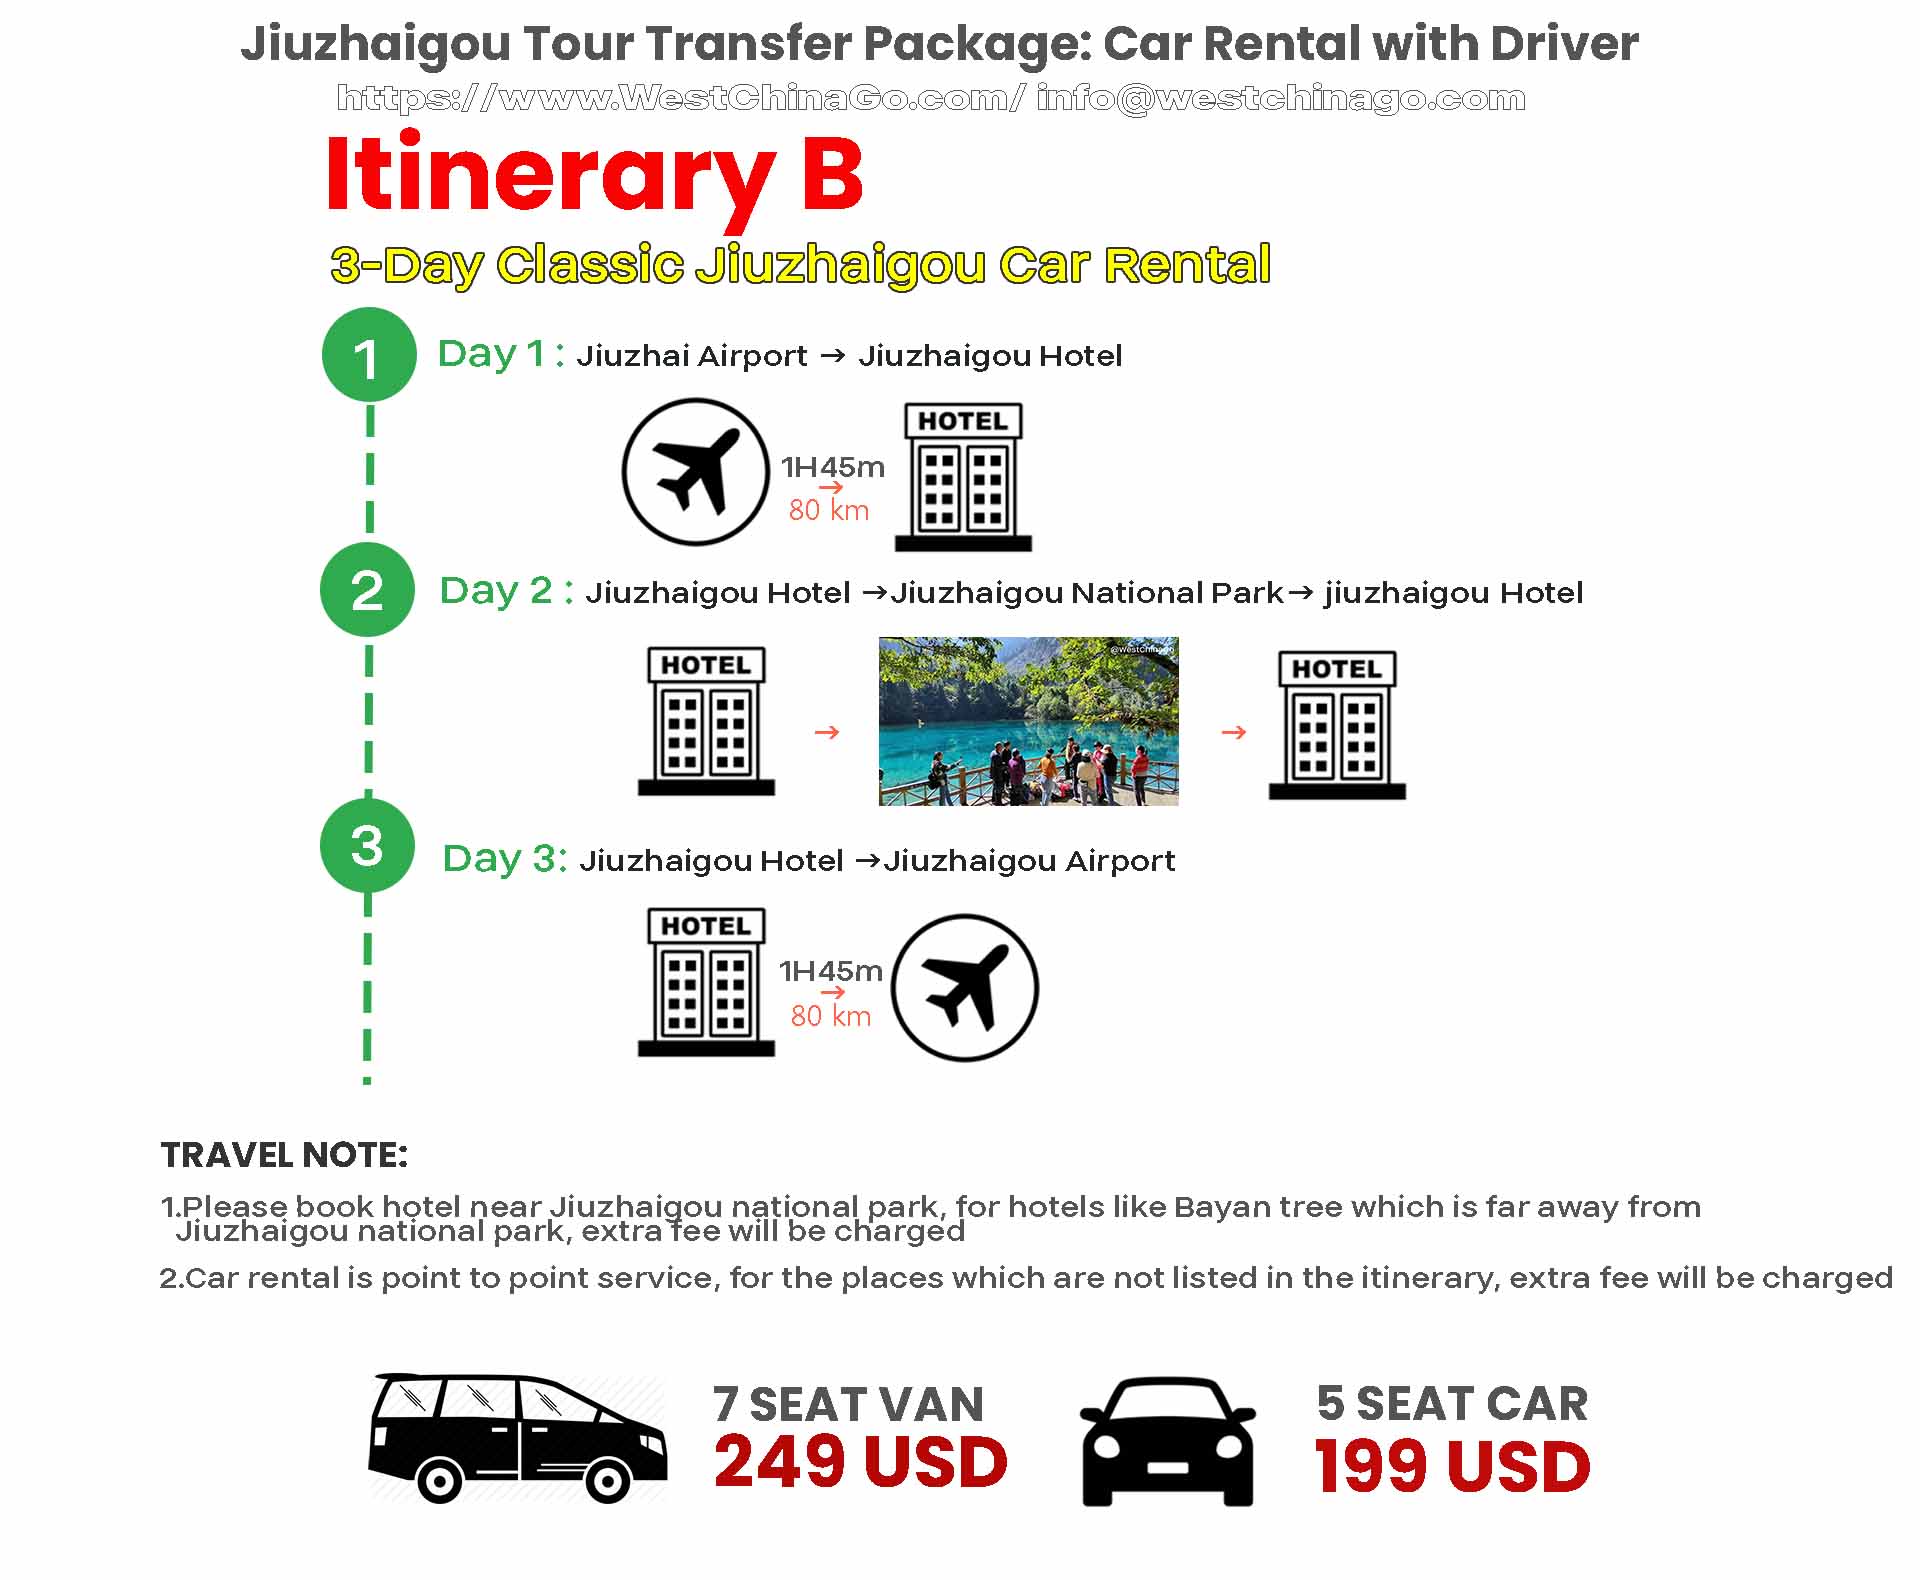 Jiuzhaigou Tour Transfer: Car Rental with Driver